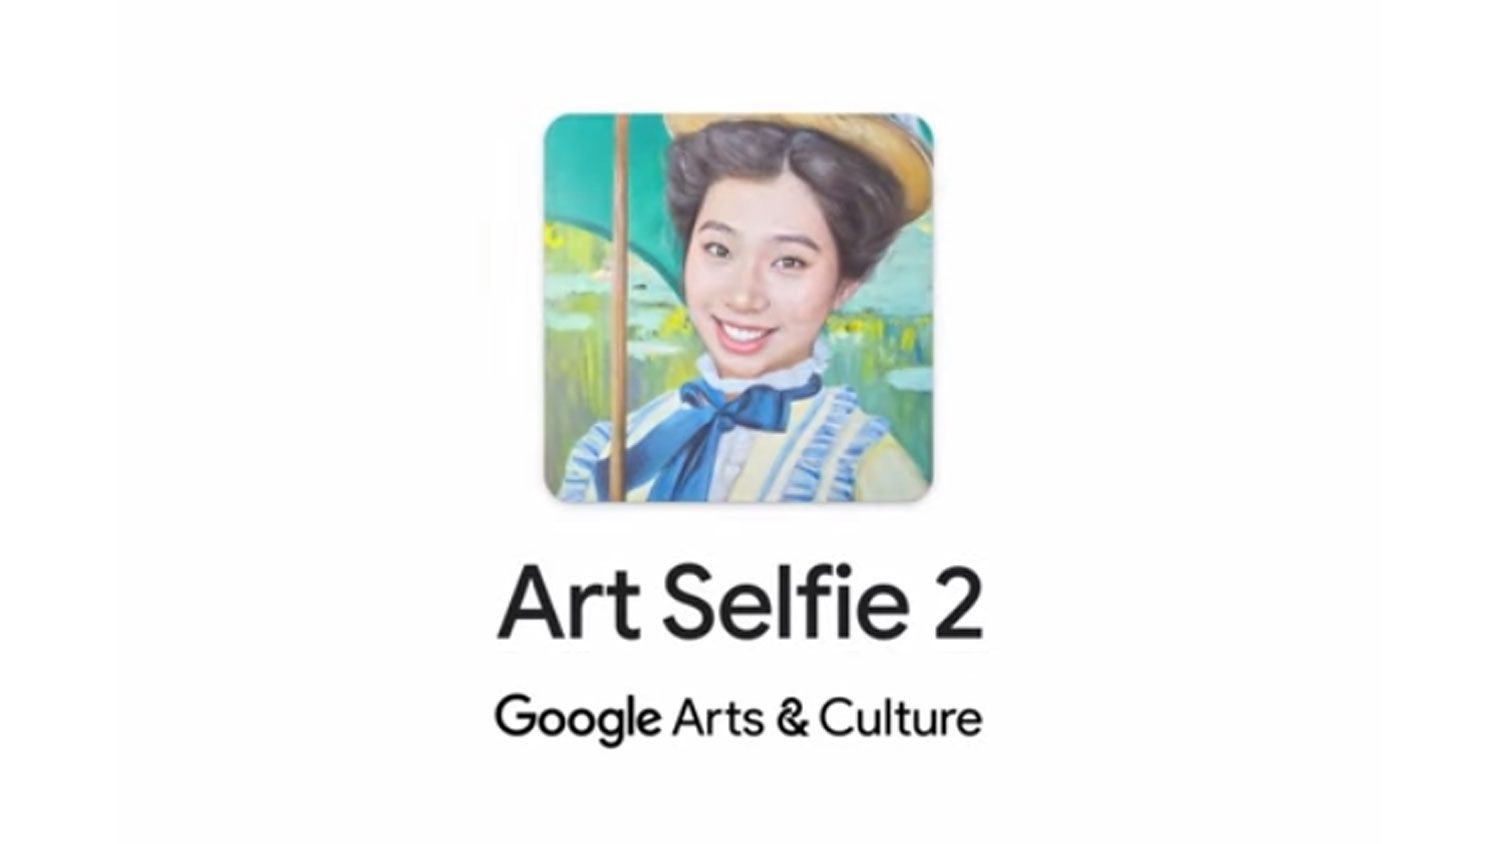 Google Art Selfie 2